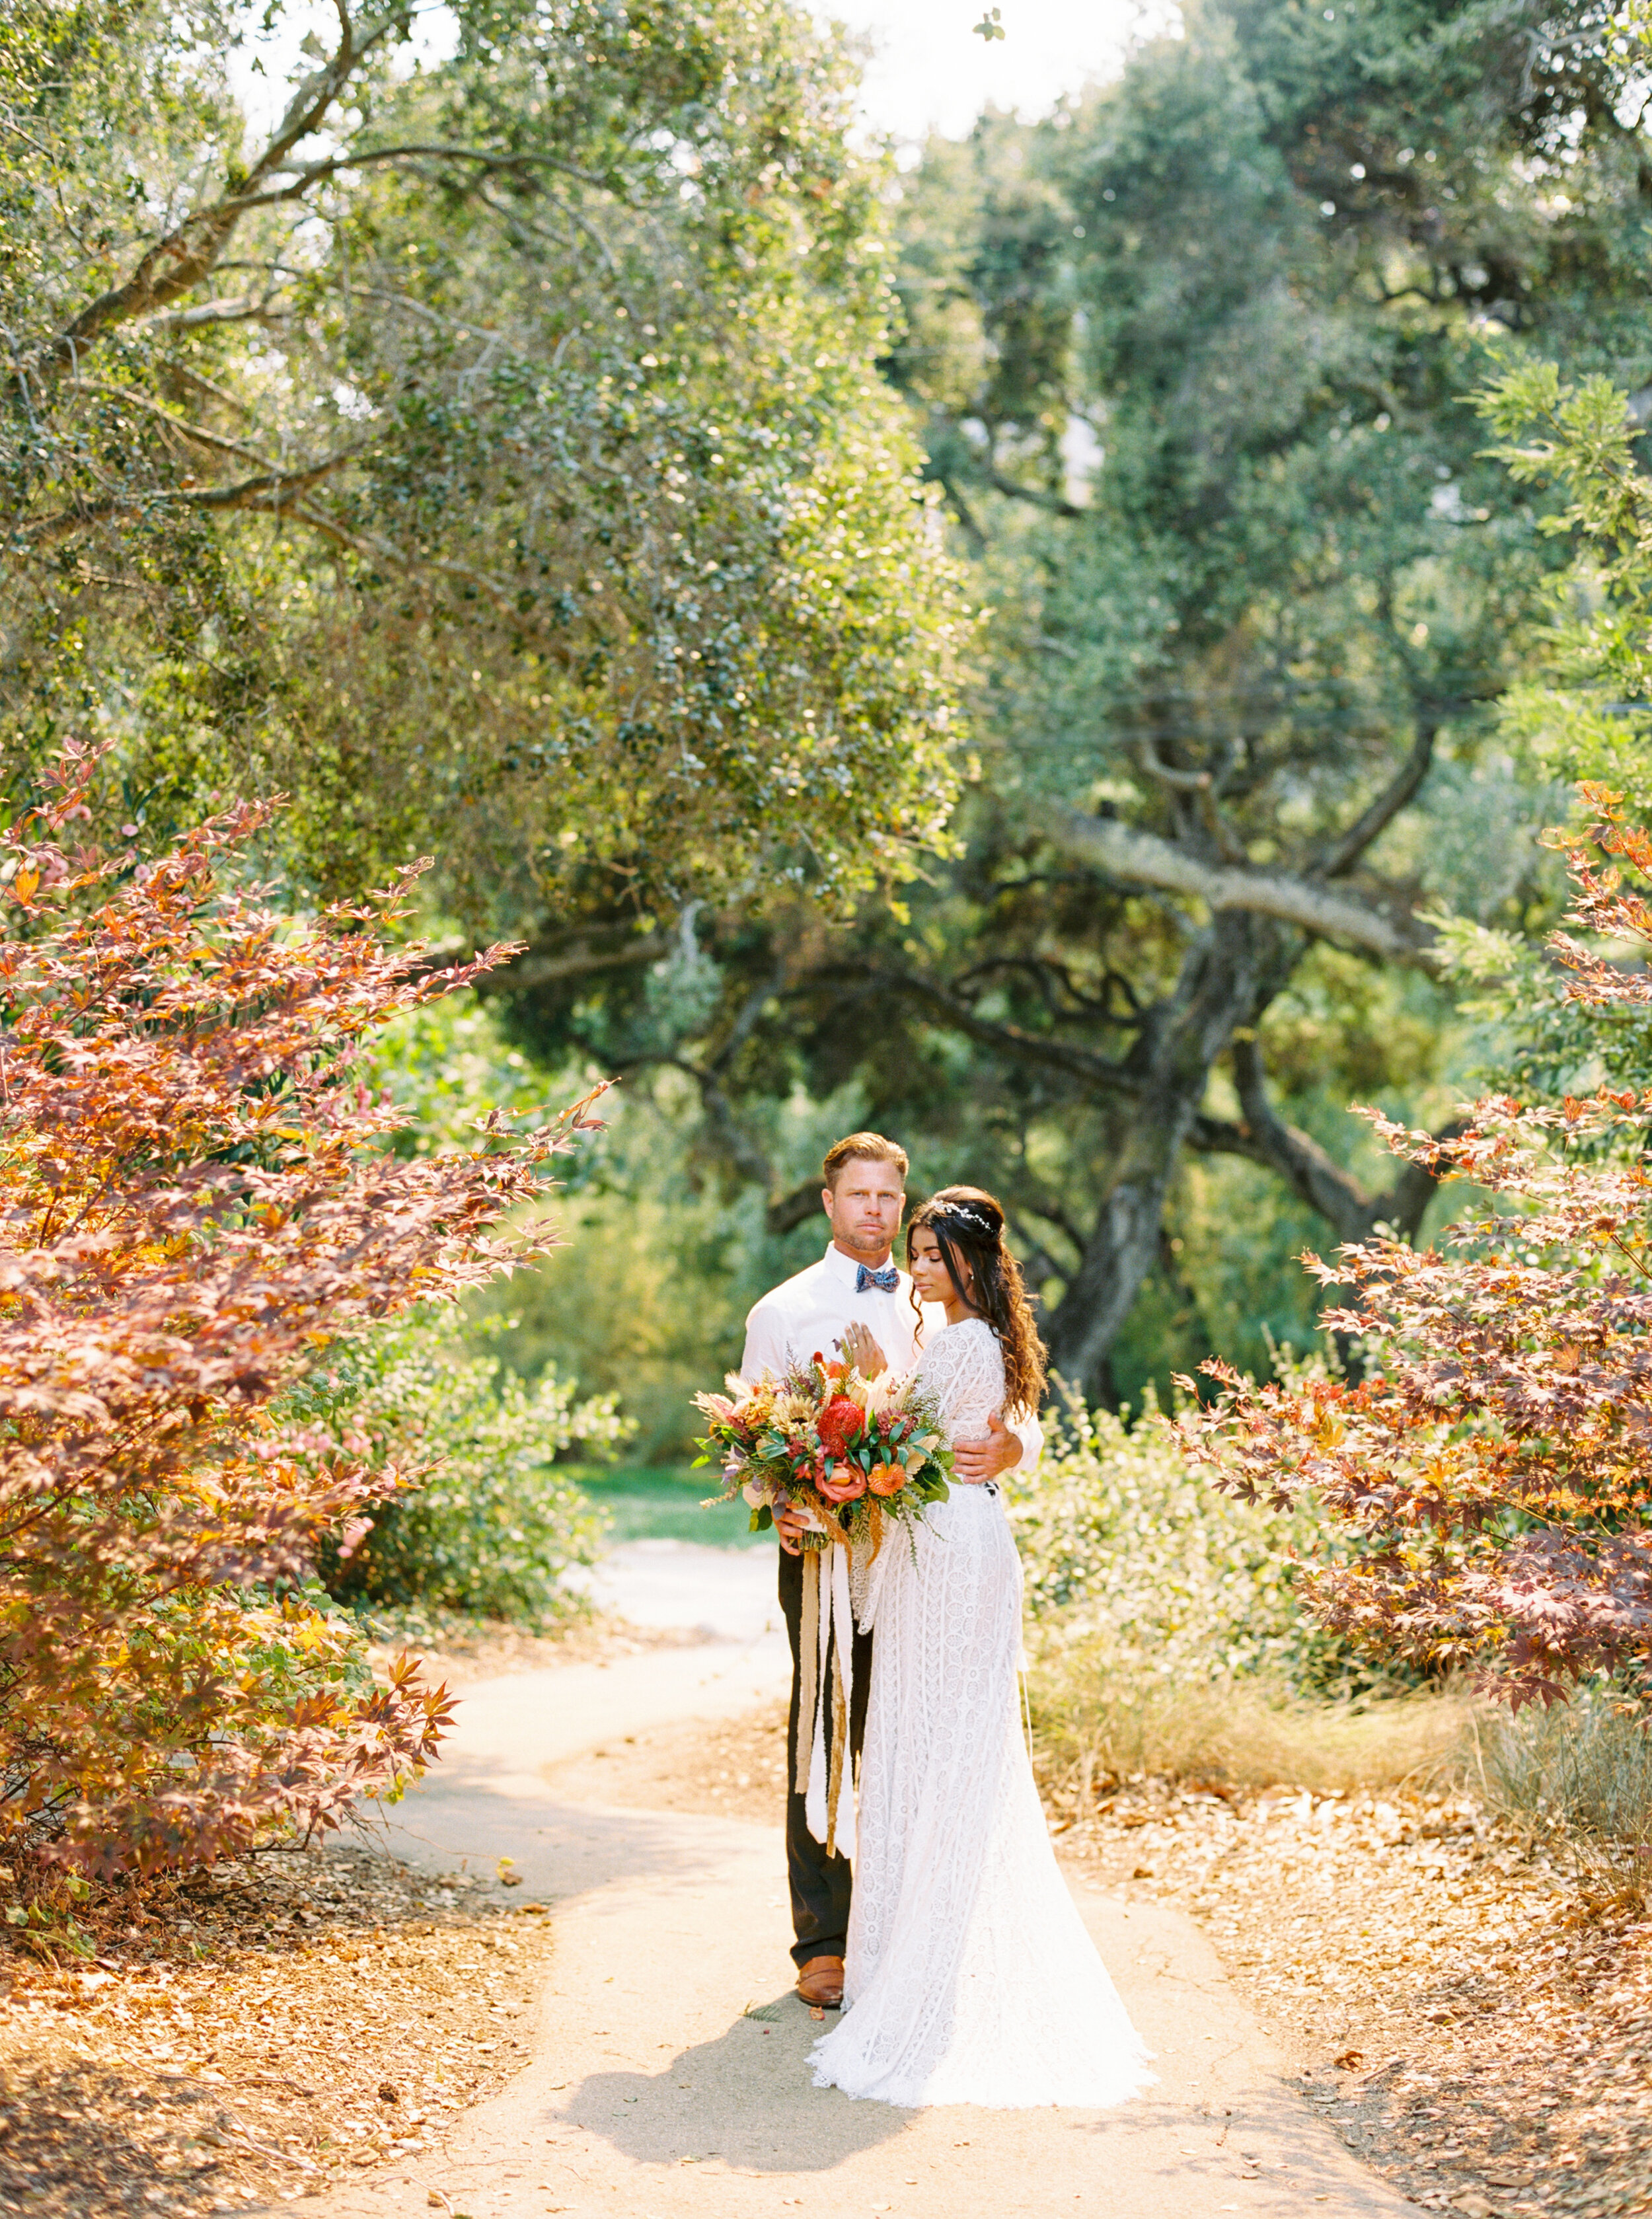 Sarahi Hadden - An Earthy Summer Boho Inspired Wedding with Sunset Hues at Gardener Ranch-39.jpg